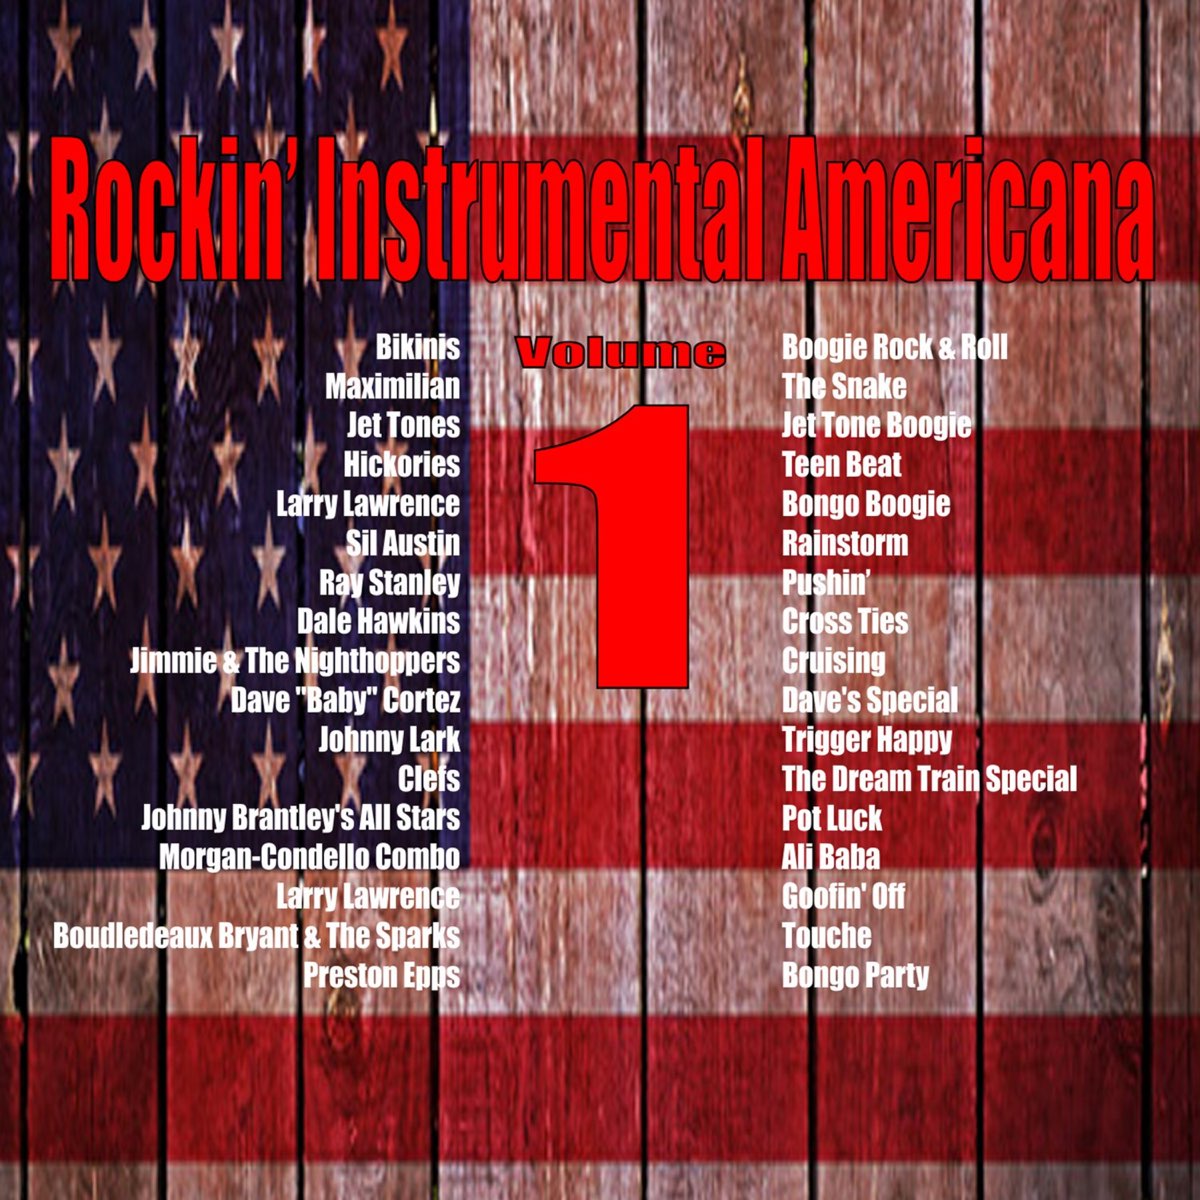 Rockin Instrumental Americana, Vol. 1 by Various Artists on Apple Music